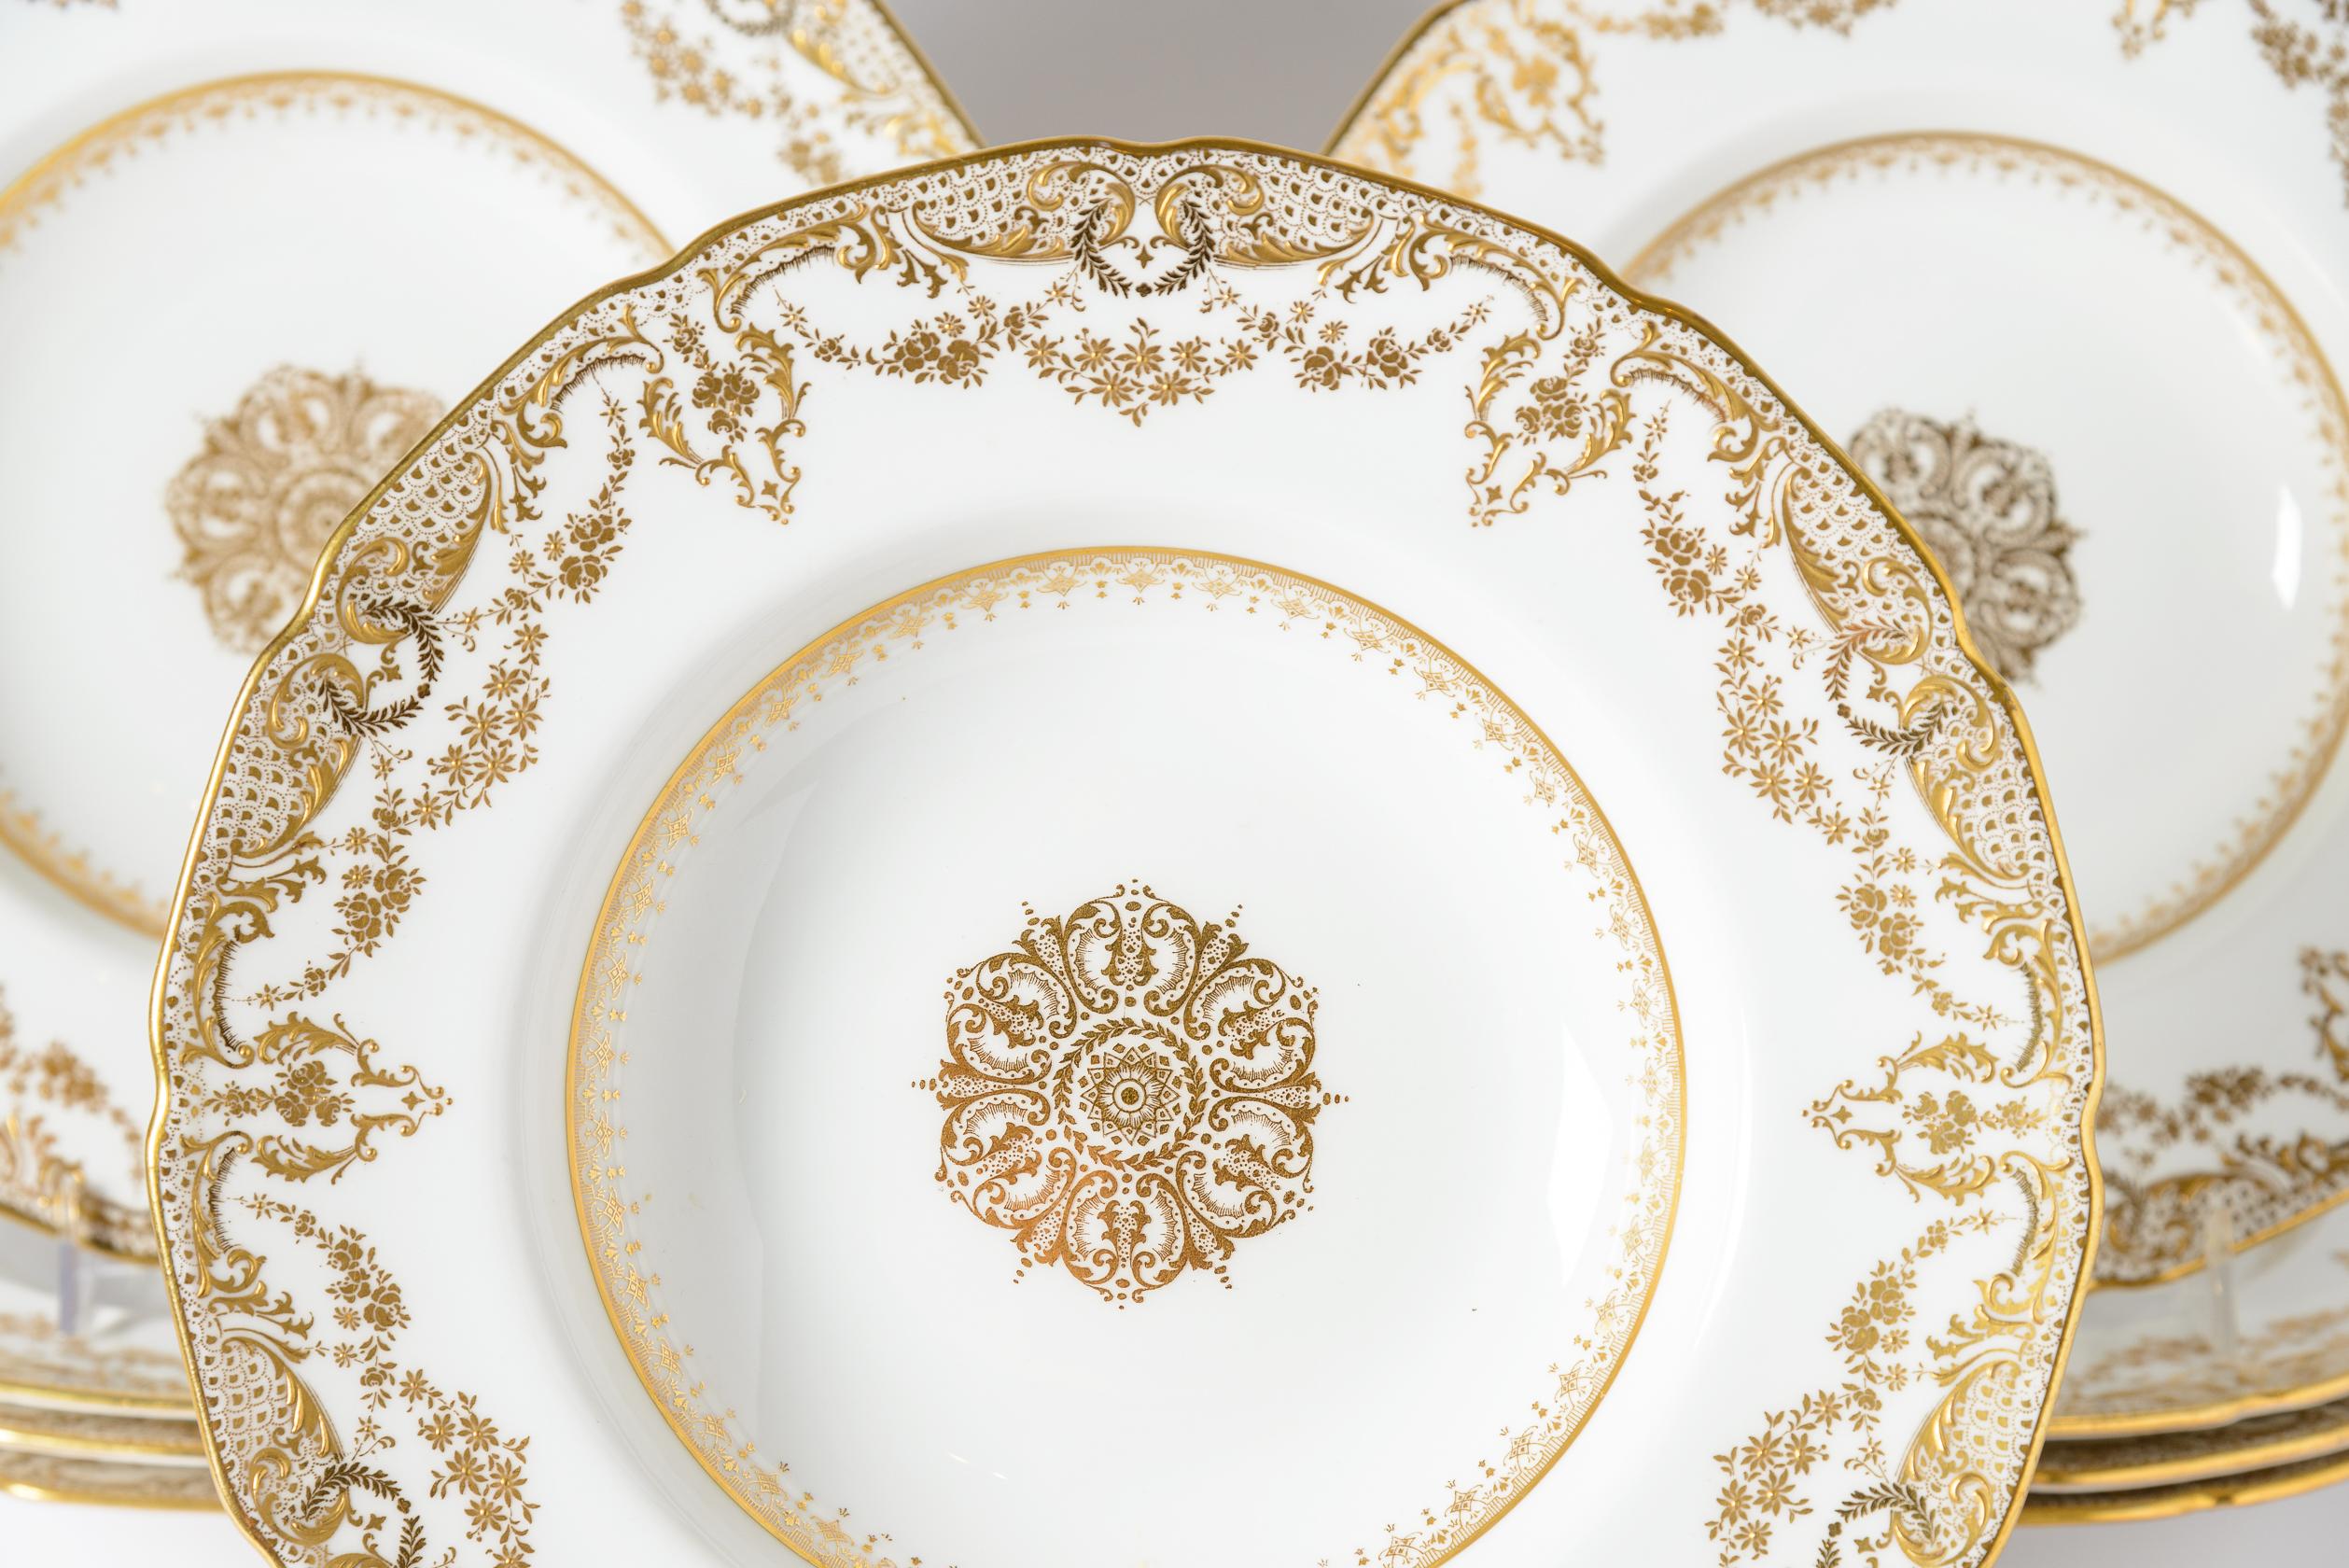 Gold Set of 12 Fine Antique Tiffany Rim Soup or Entree Bowls, English, circa 1910